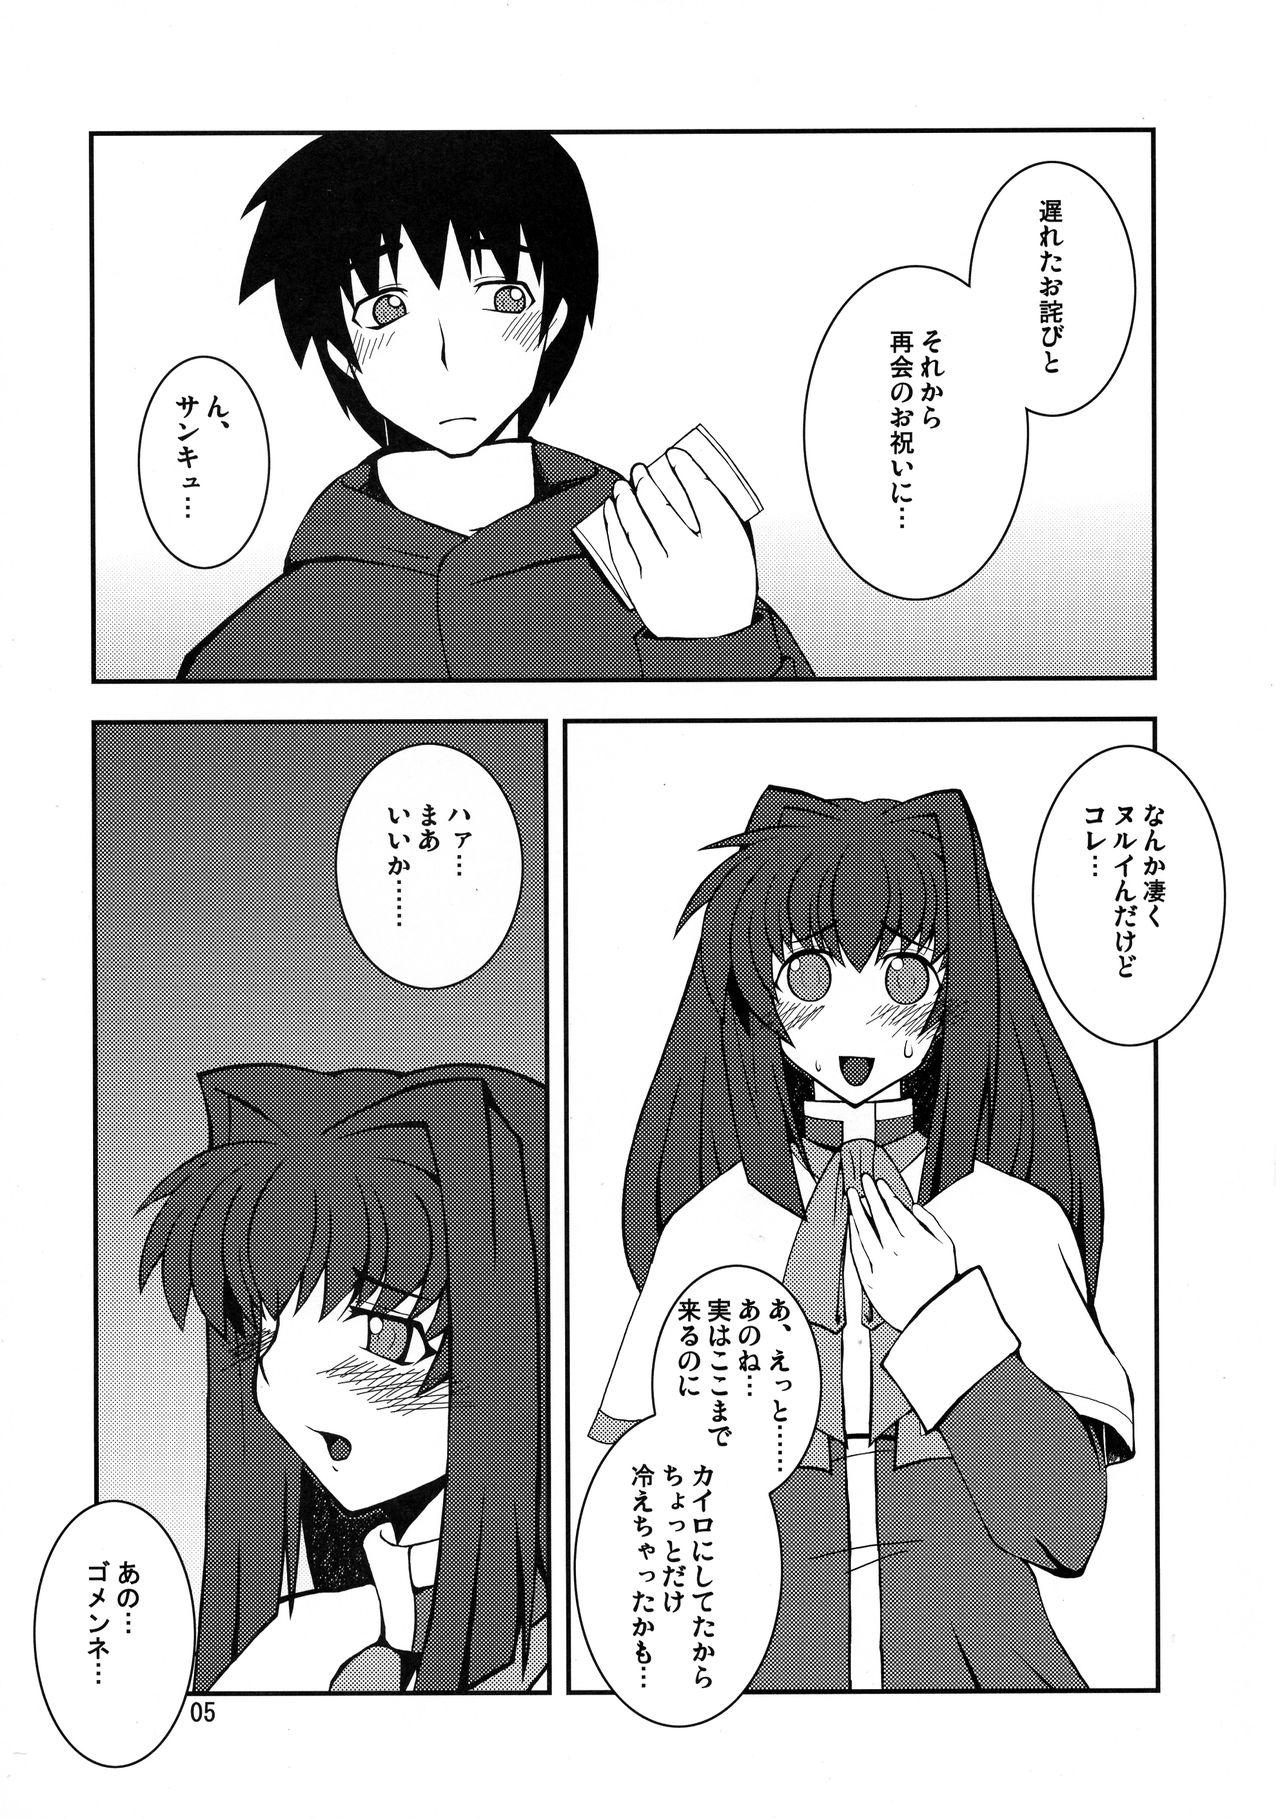 English Kyouki Vol. 3~5 Remake Ver. - Kanon Olderwoman - Page 5